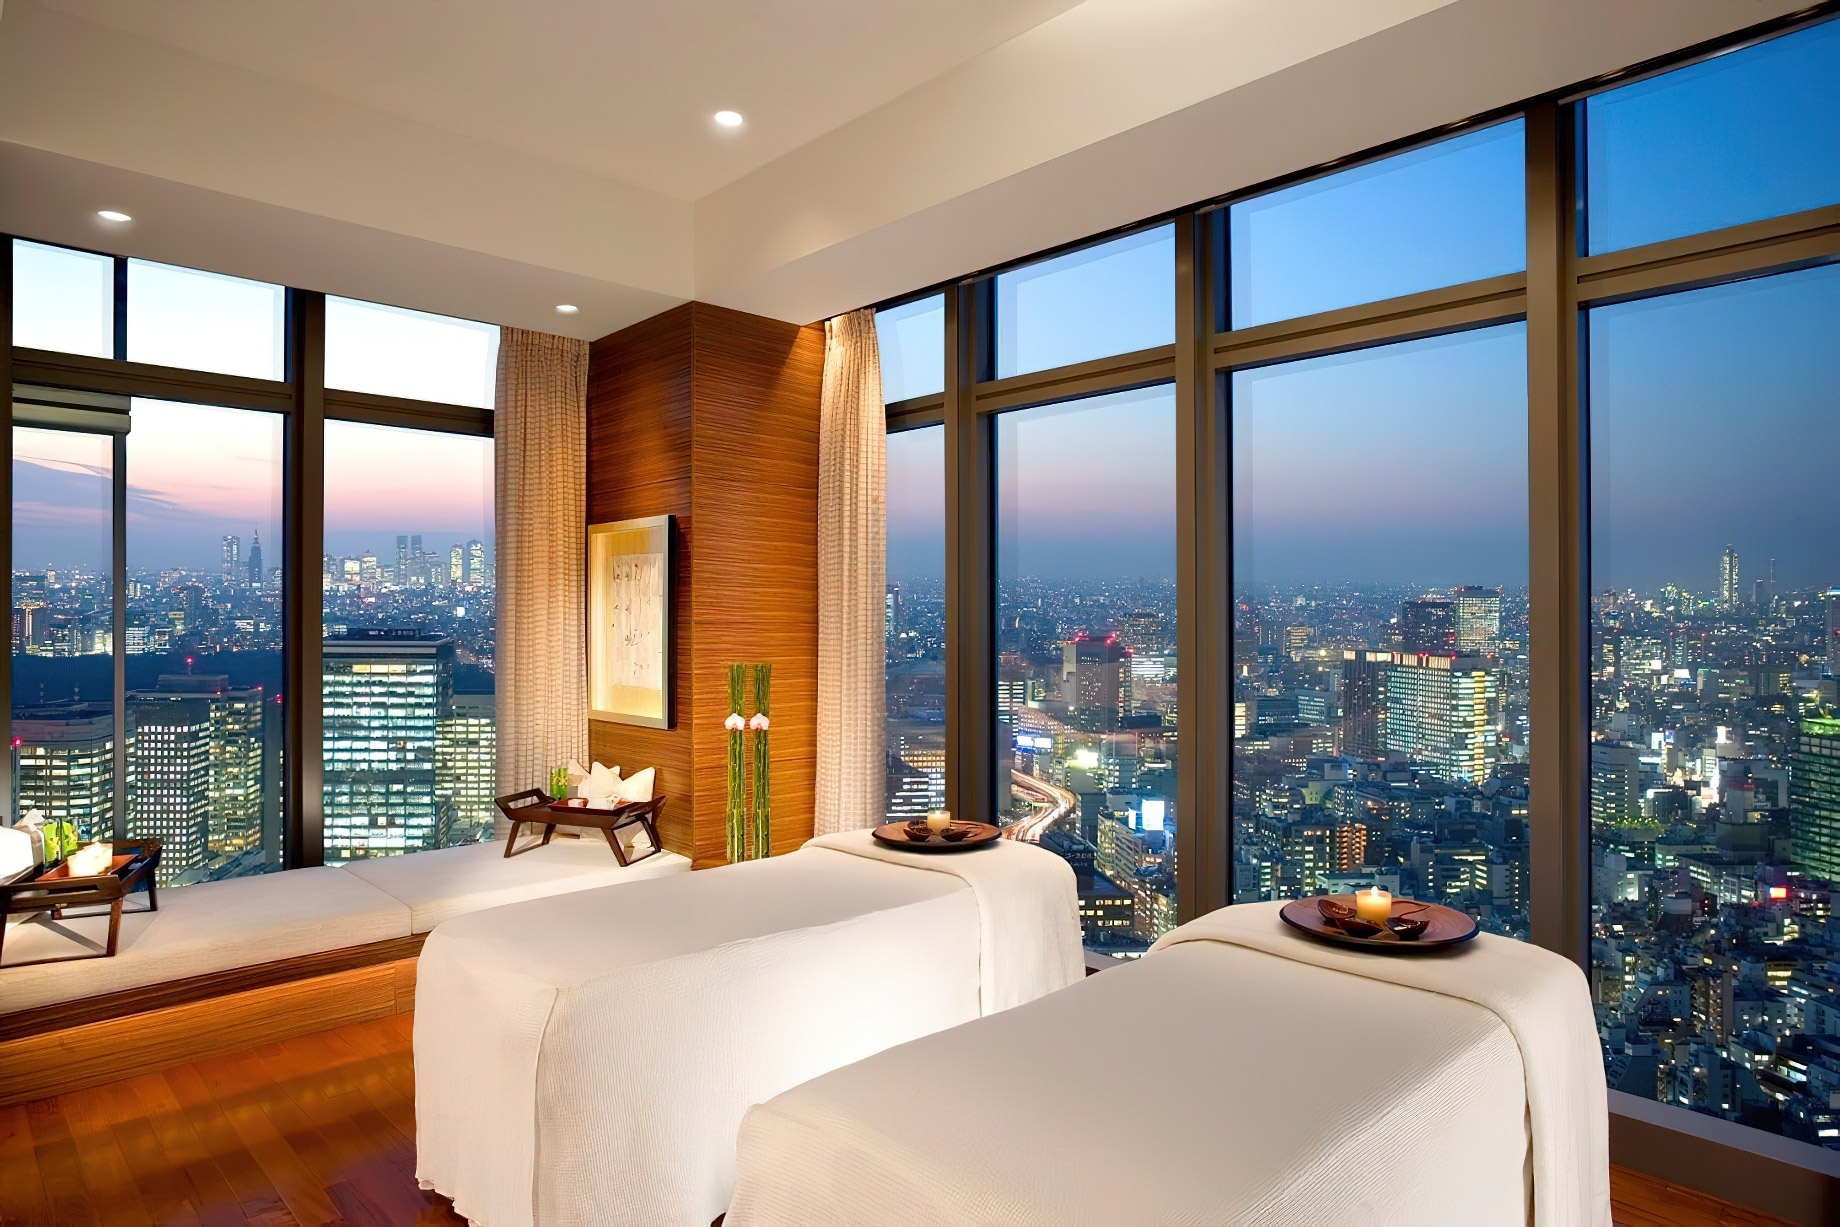 Mandarin Oriental, Tokyo Hotel – Tokyo, Japan – Spa Treatment Room